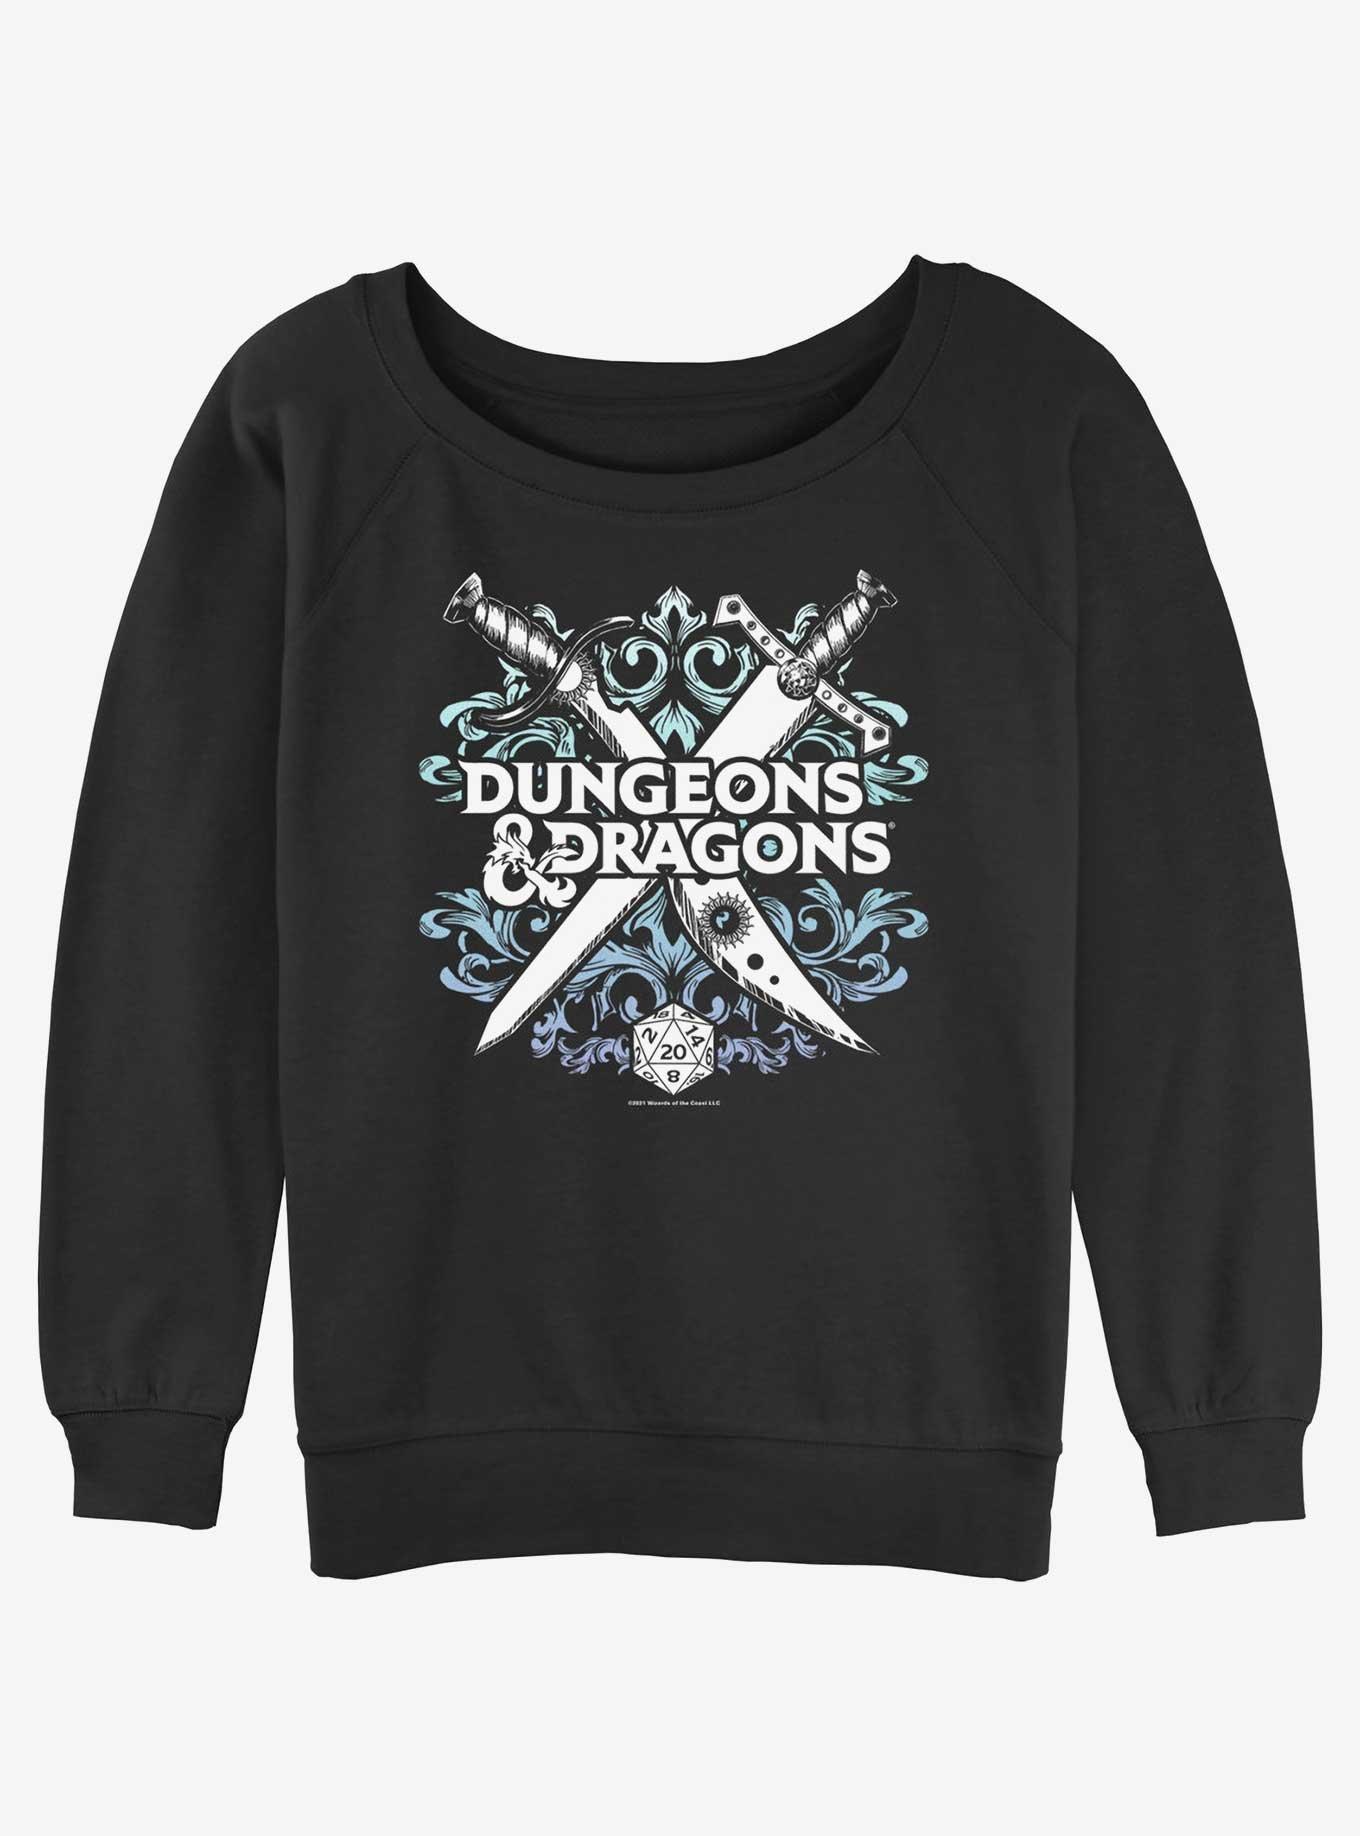 Dungeons & Dragons Decorative Crossed Weapons Logo Girls Slouchy Sweatshirt, BLACK, hi-res